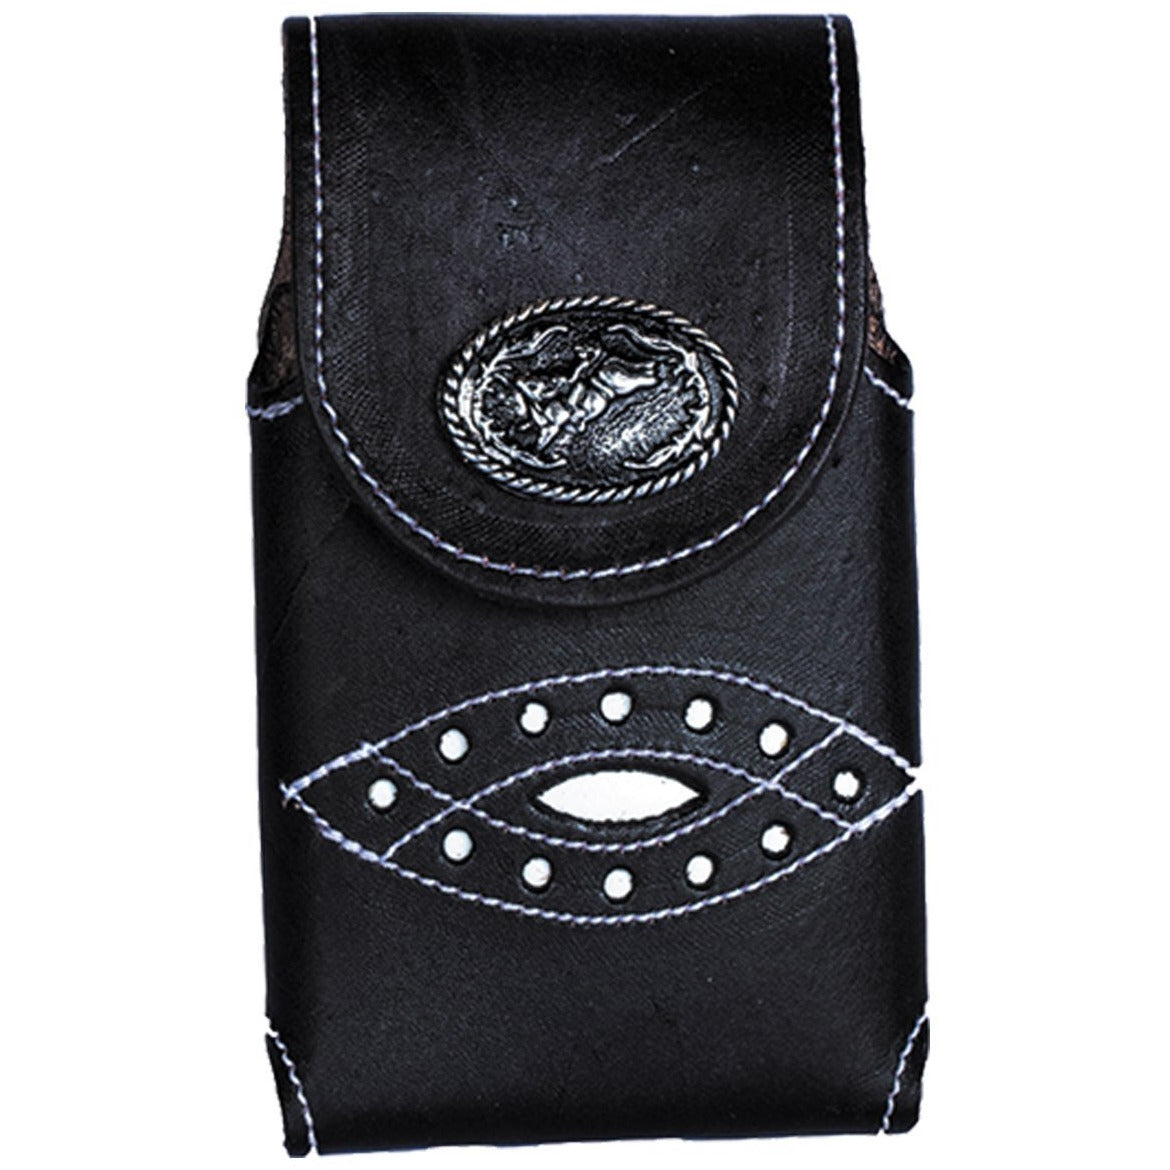 FB01 Black Charra Leather Case